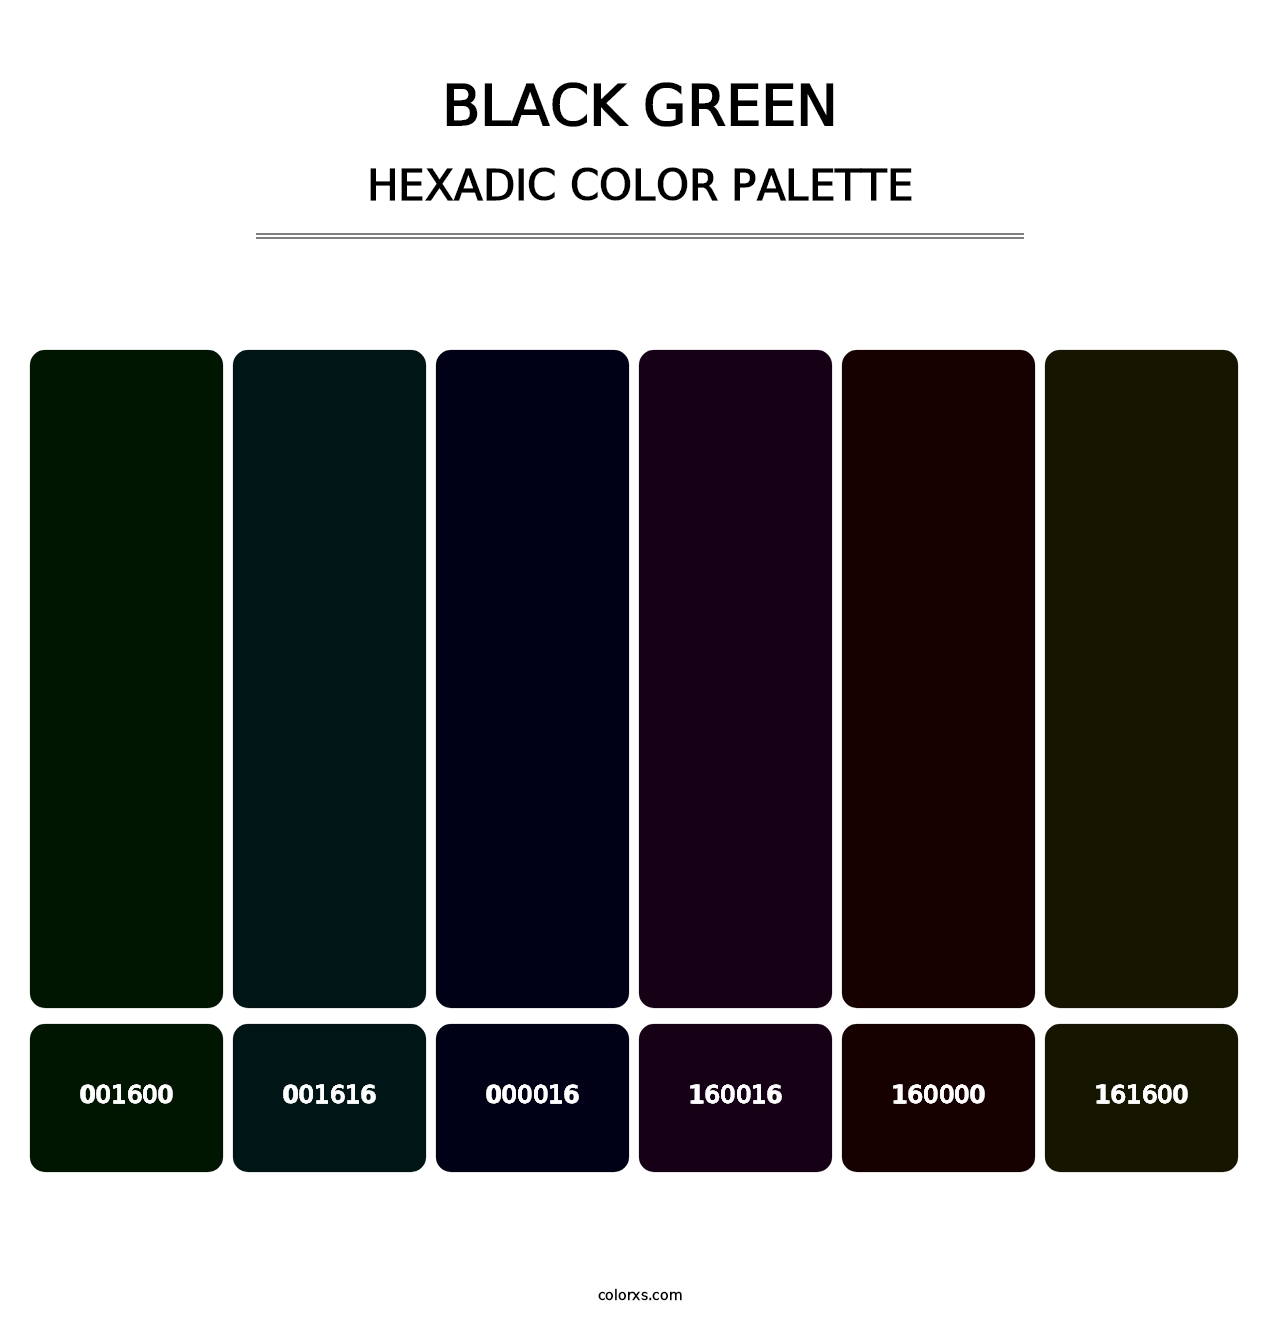 Black Green - Hexadic Color Palette